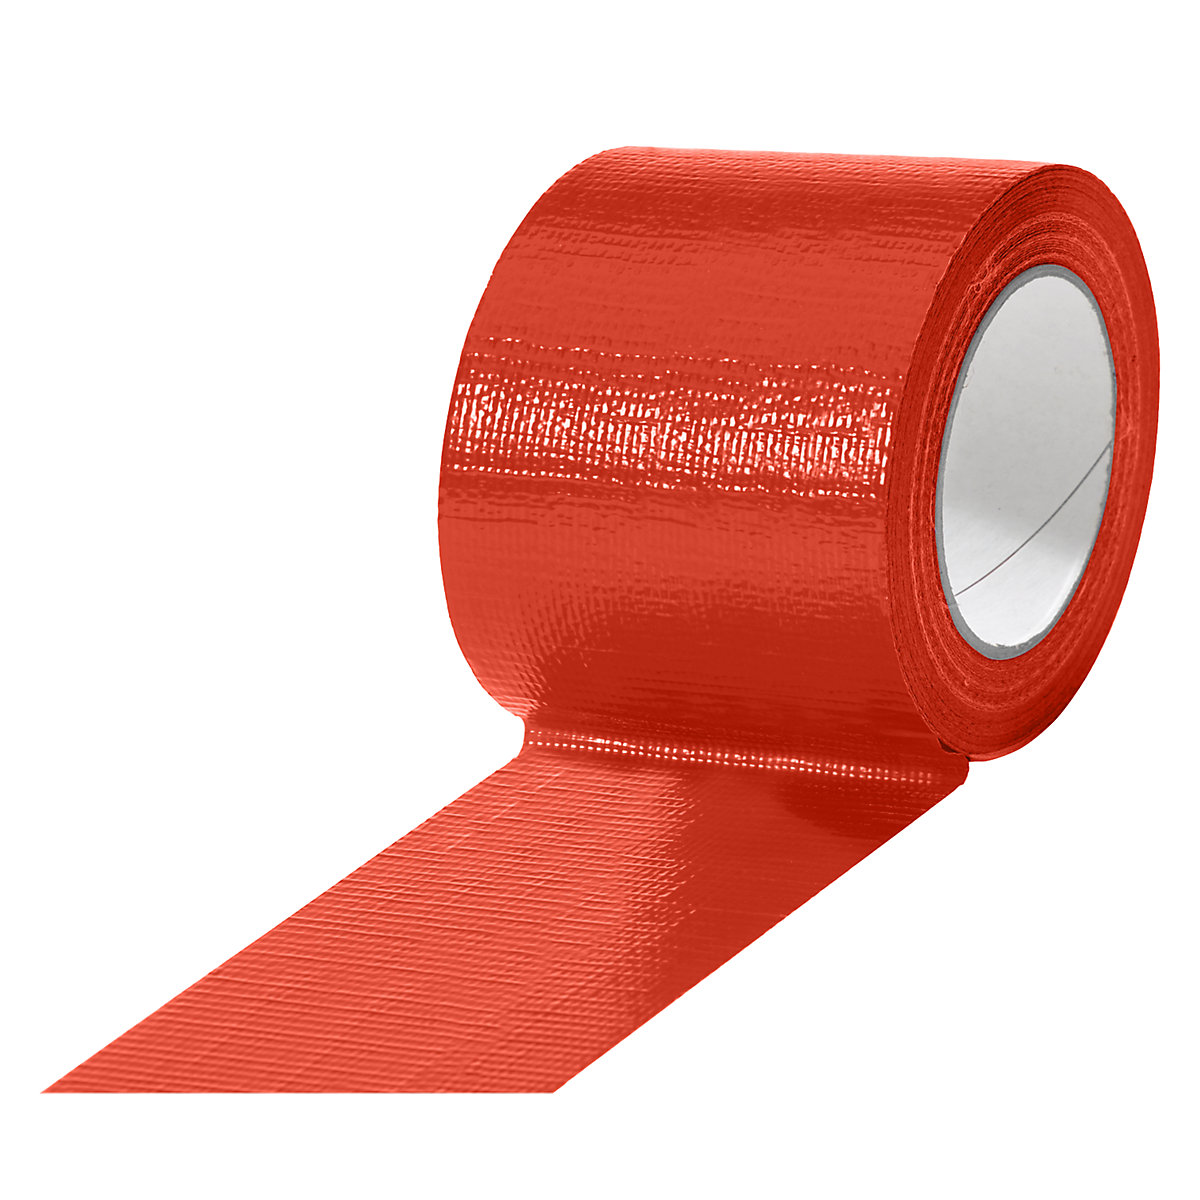 Tkaninová páska, v různých barvách, bal.j. 12 rolí, červená, šířka pásky 75 mm-13